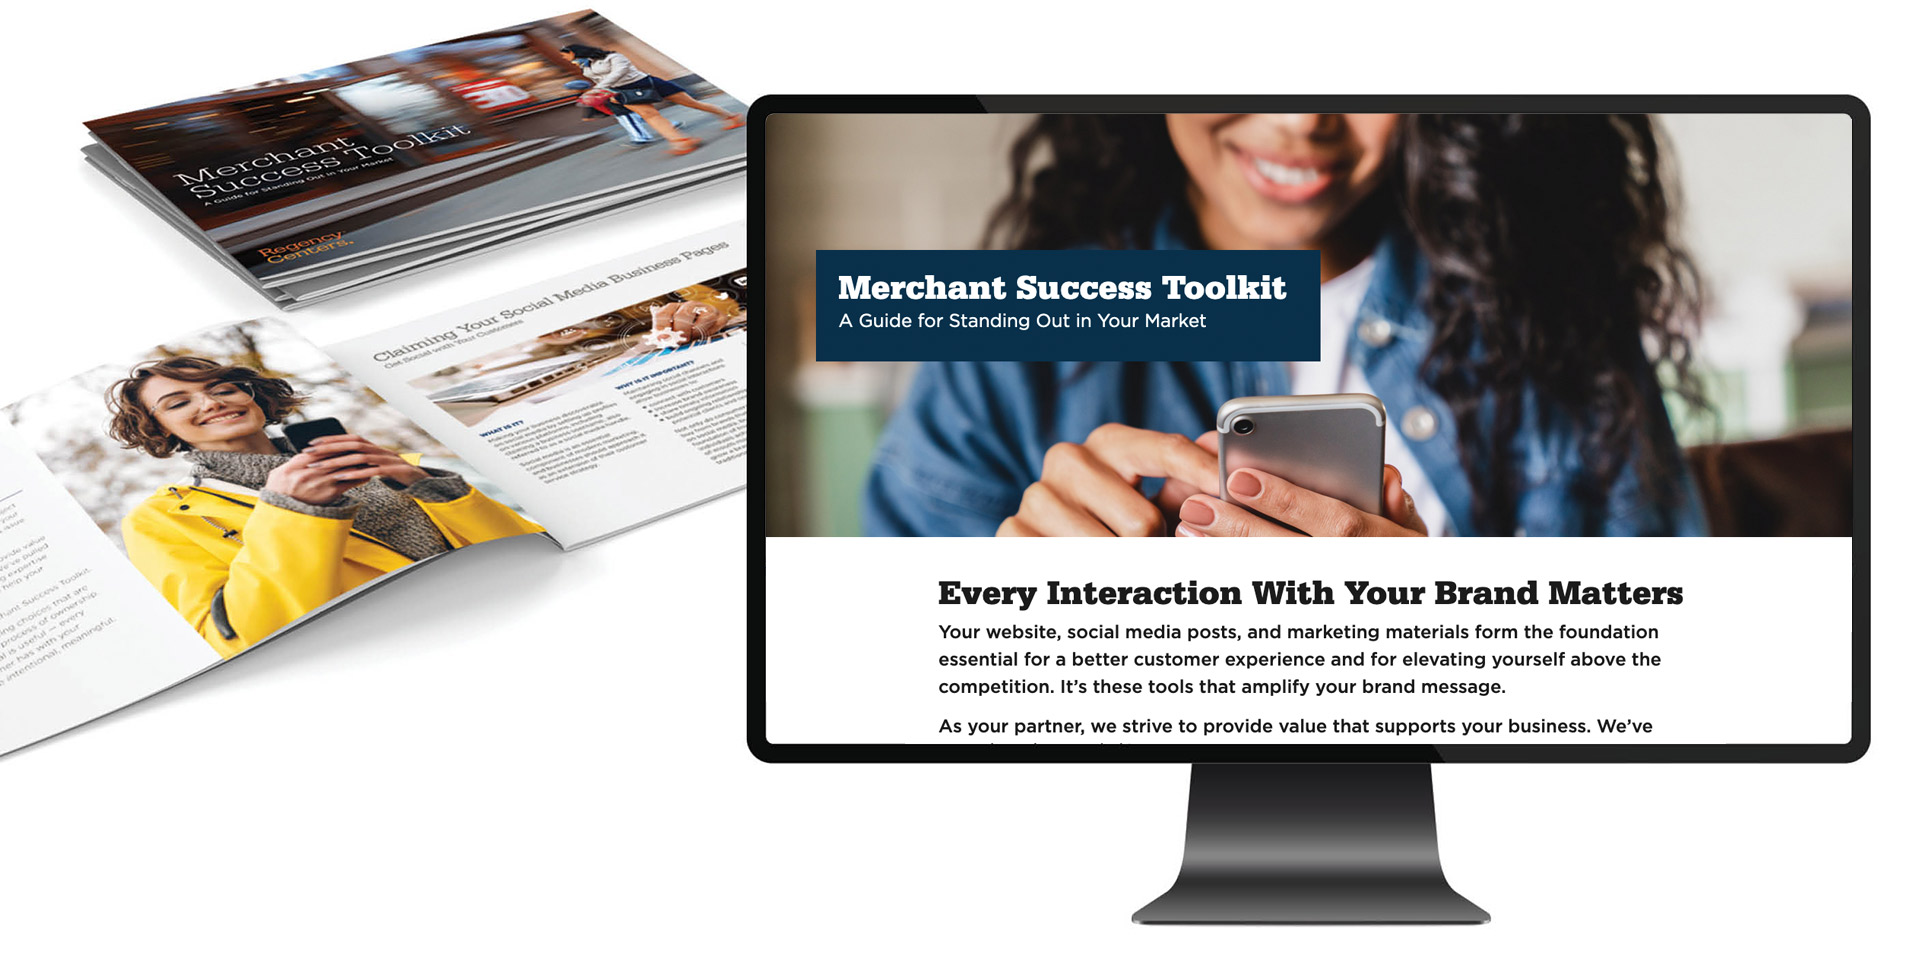 Image of Regency's Merchant Success Toolkit website and book.